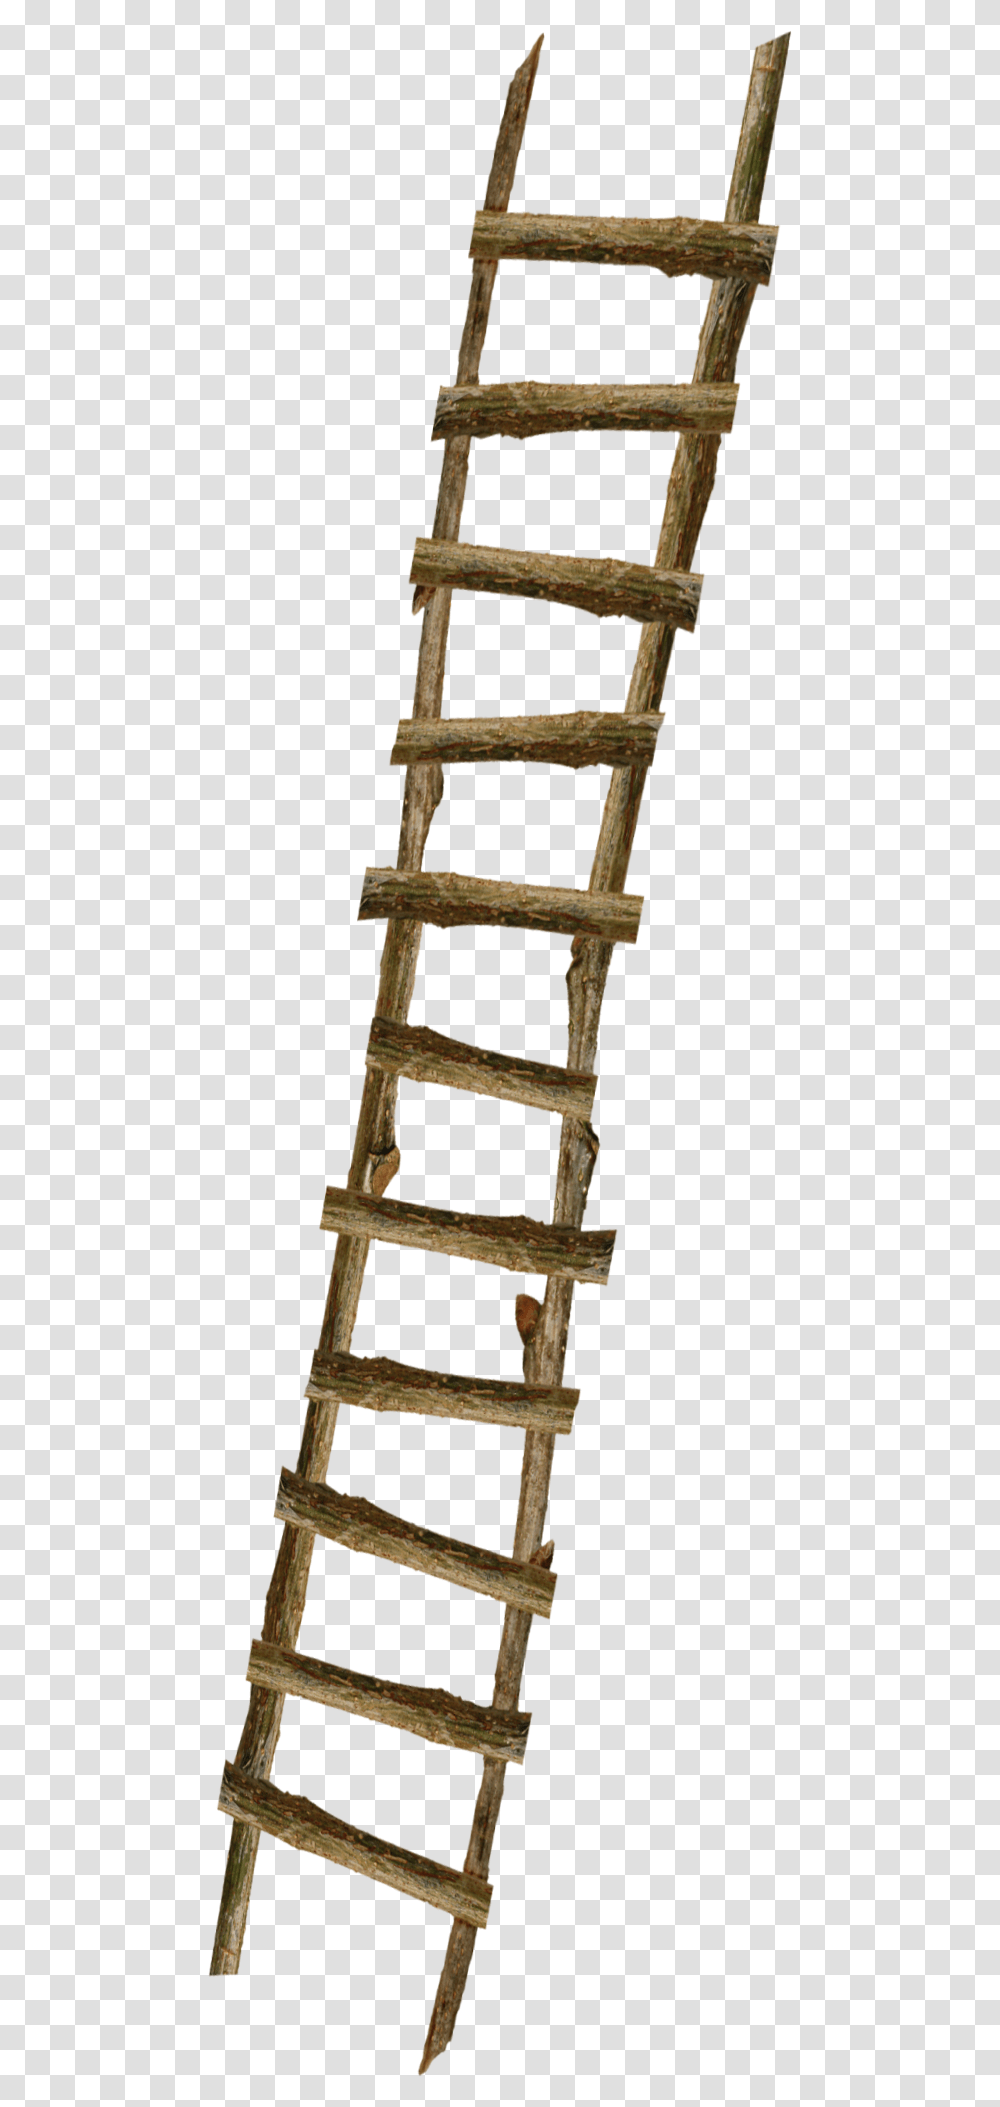 Mq Ladder Brown Climbing Wood Wooden Wooden Ladder, Stand, Shop, Furniture Transparent Png